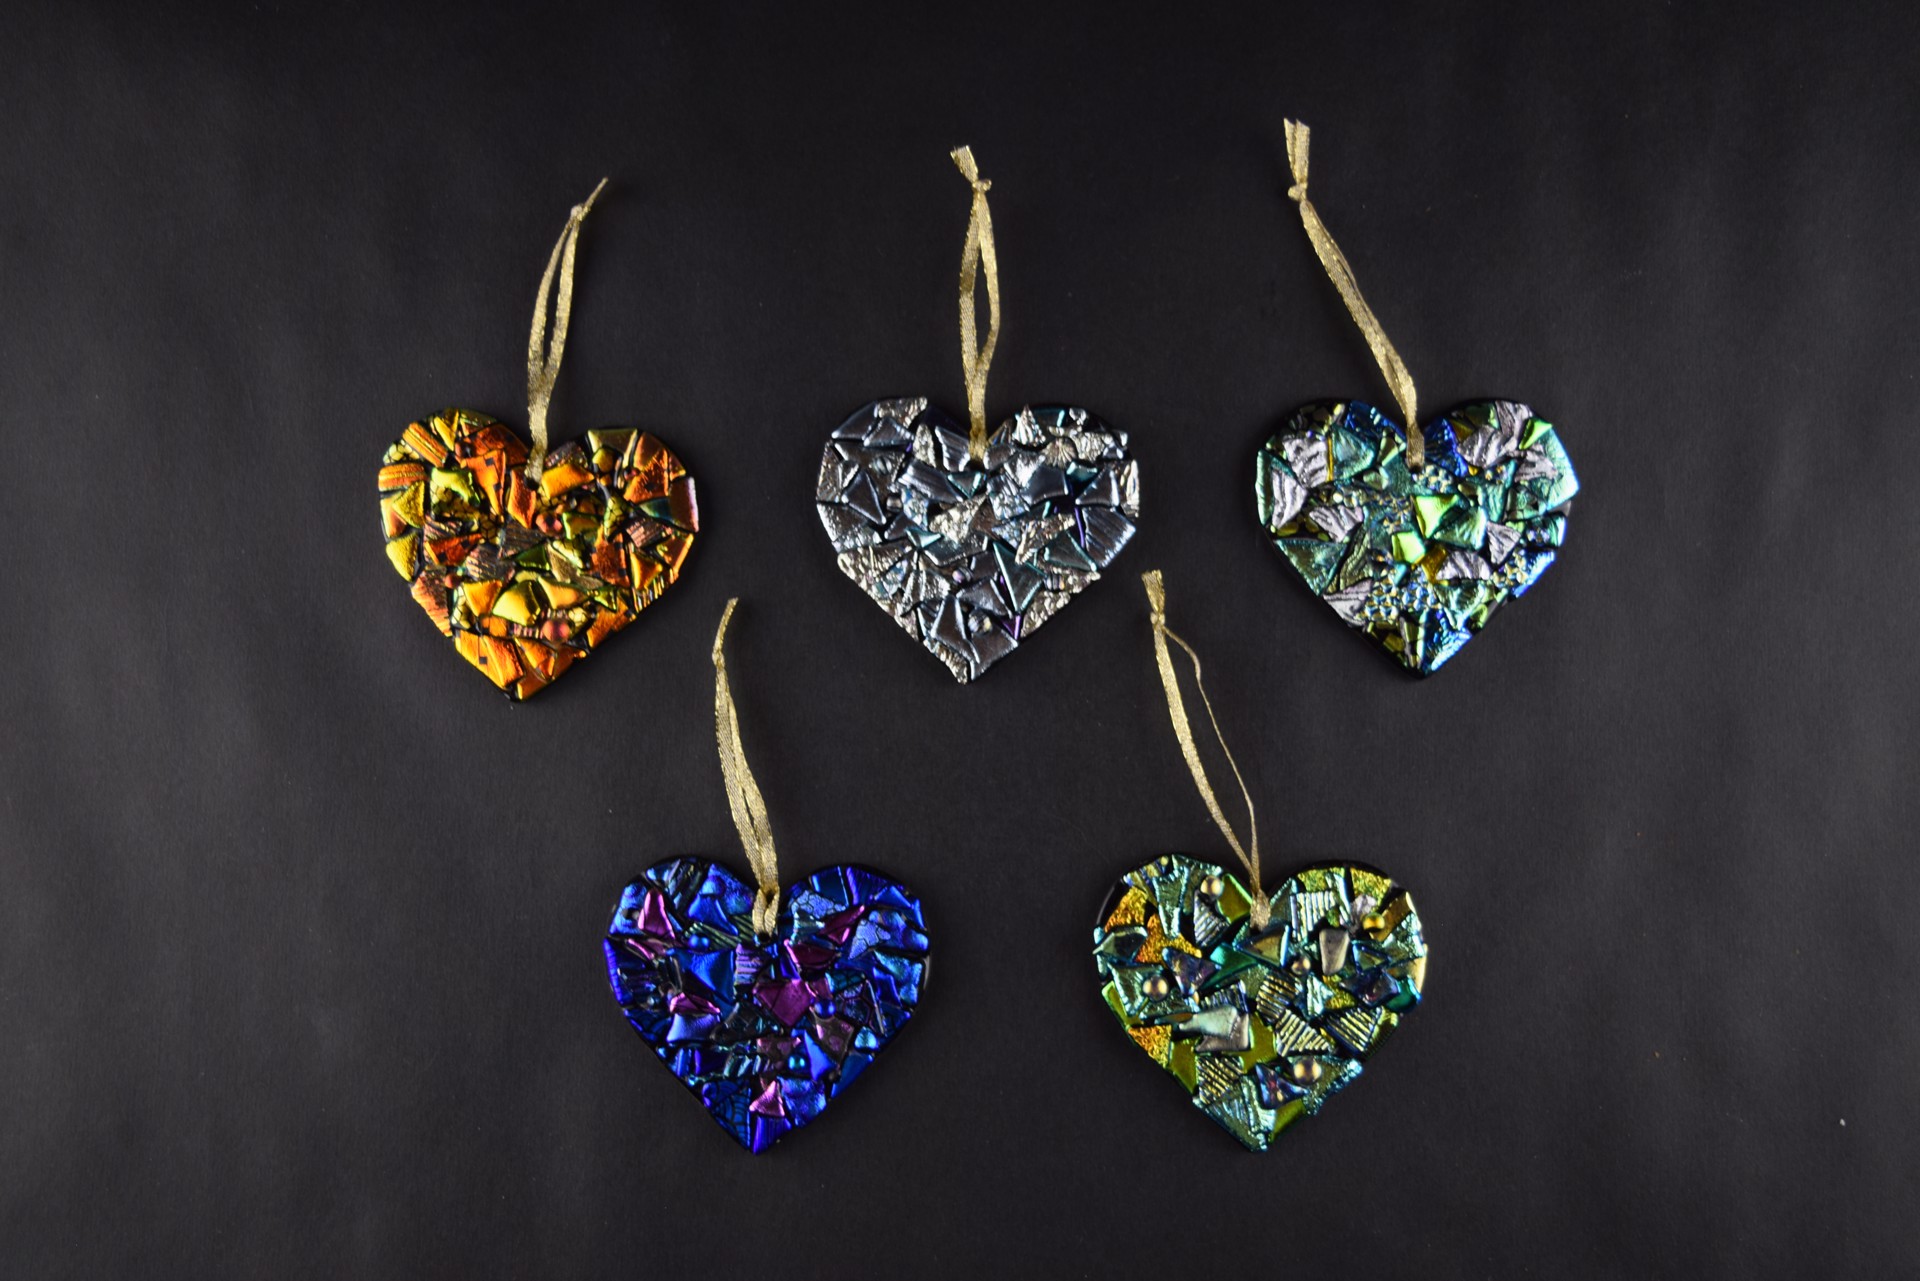 Heart Ornament by Doug and Barbara Henderson